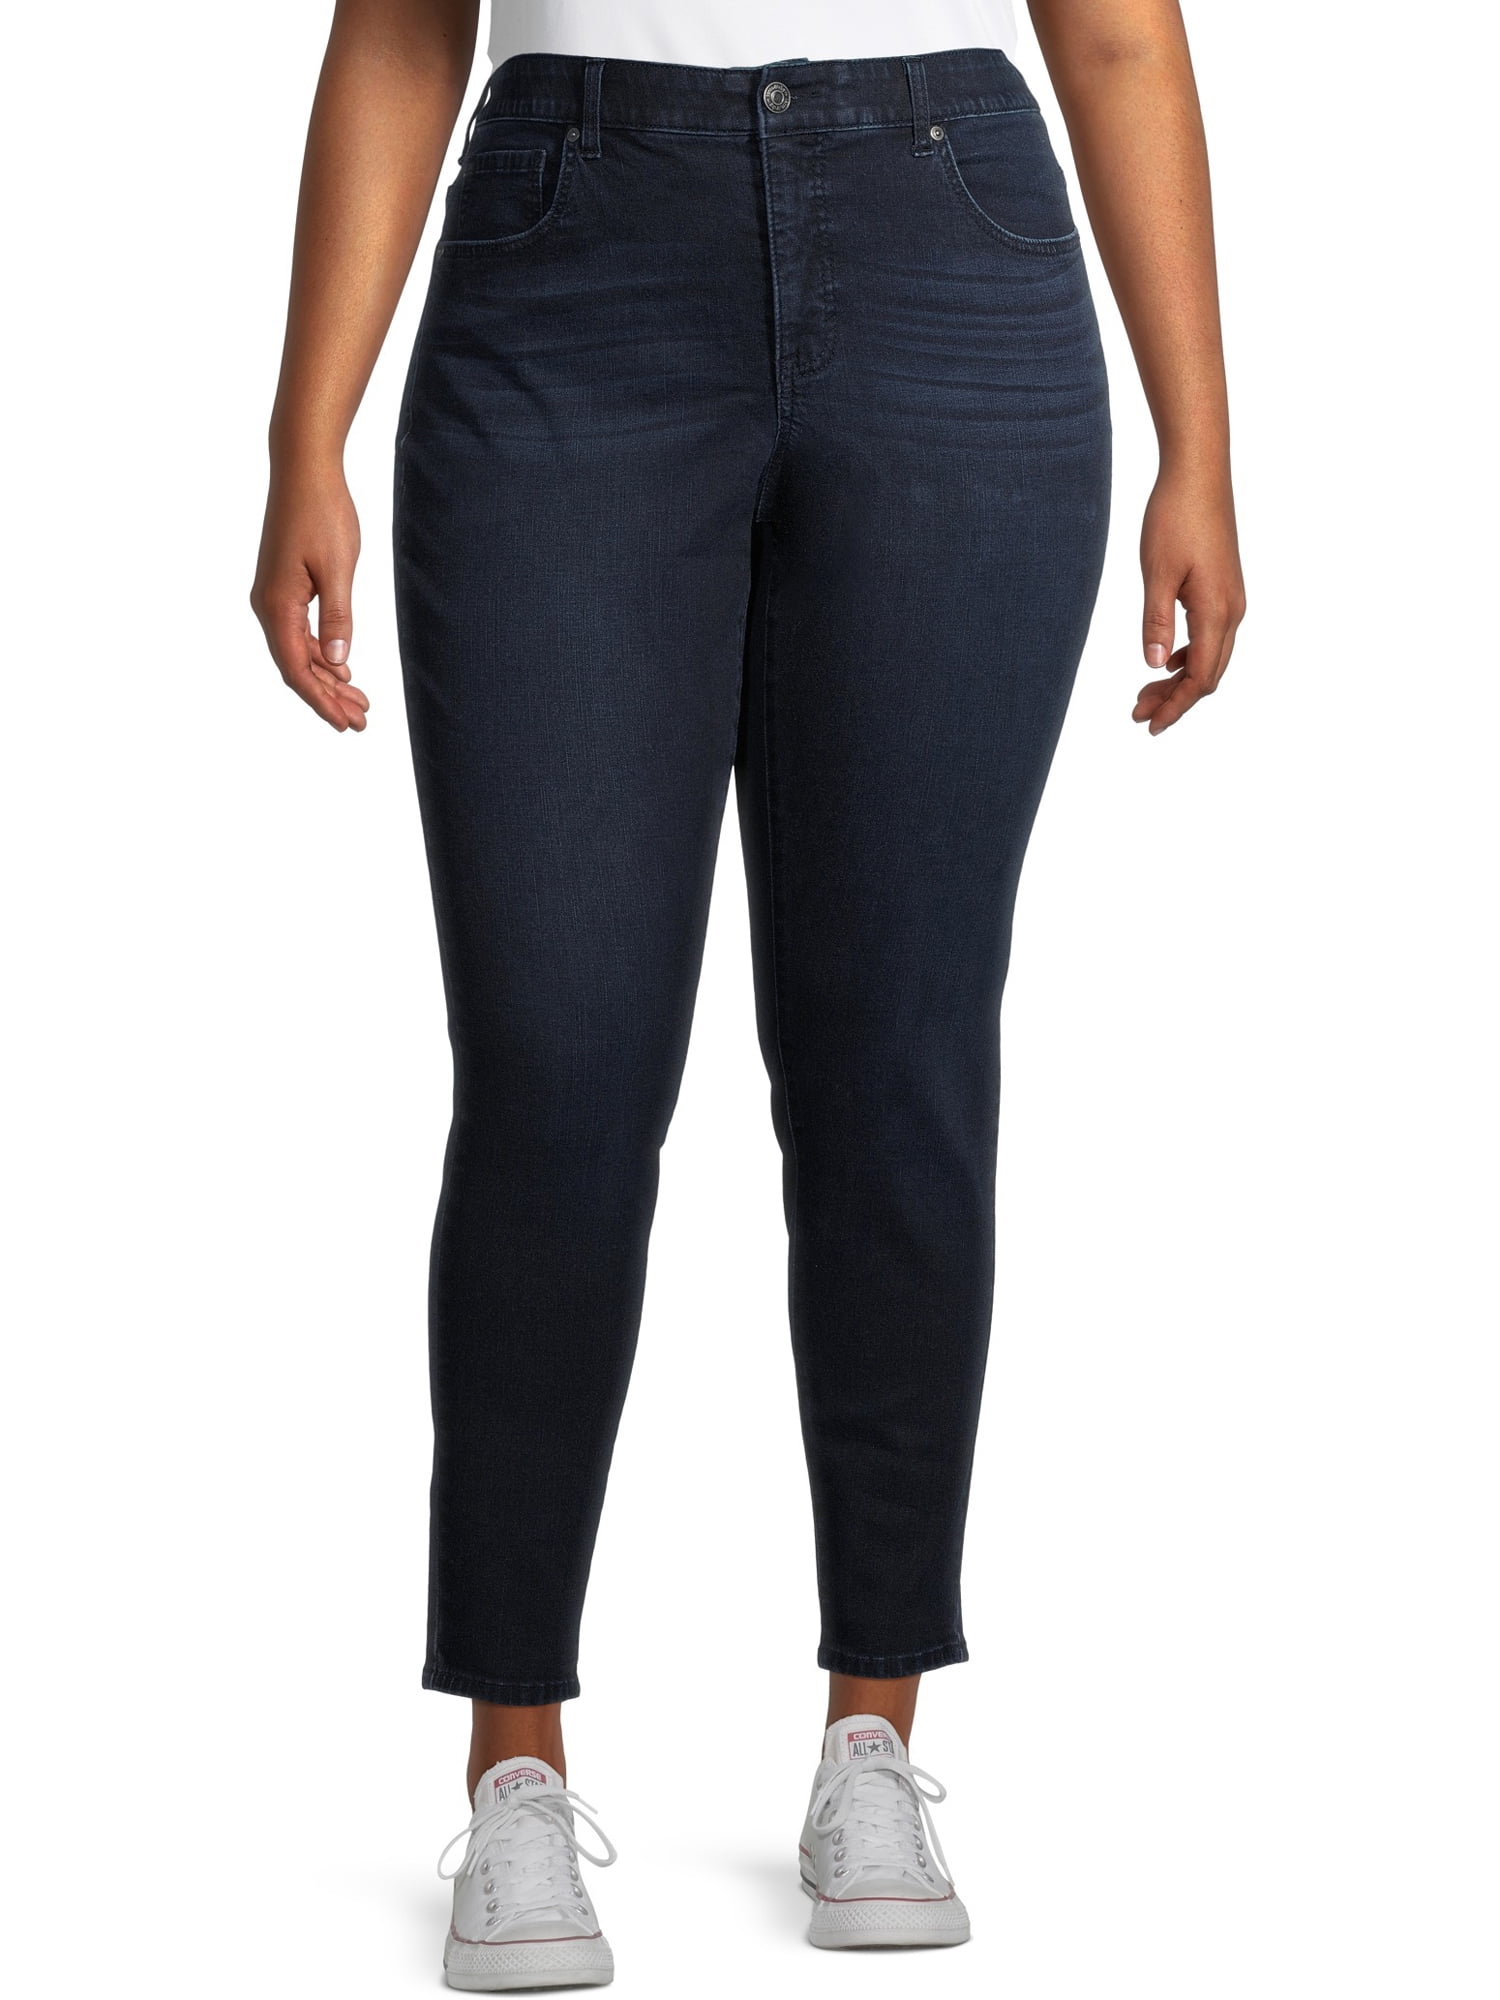 Terra & Sky Women's Plus Size Comfort Waist Skinny Jeans - Walmart.com